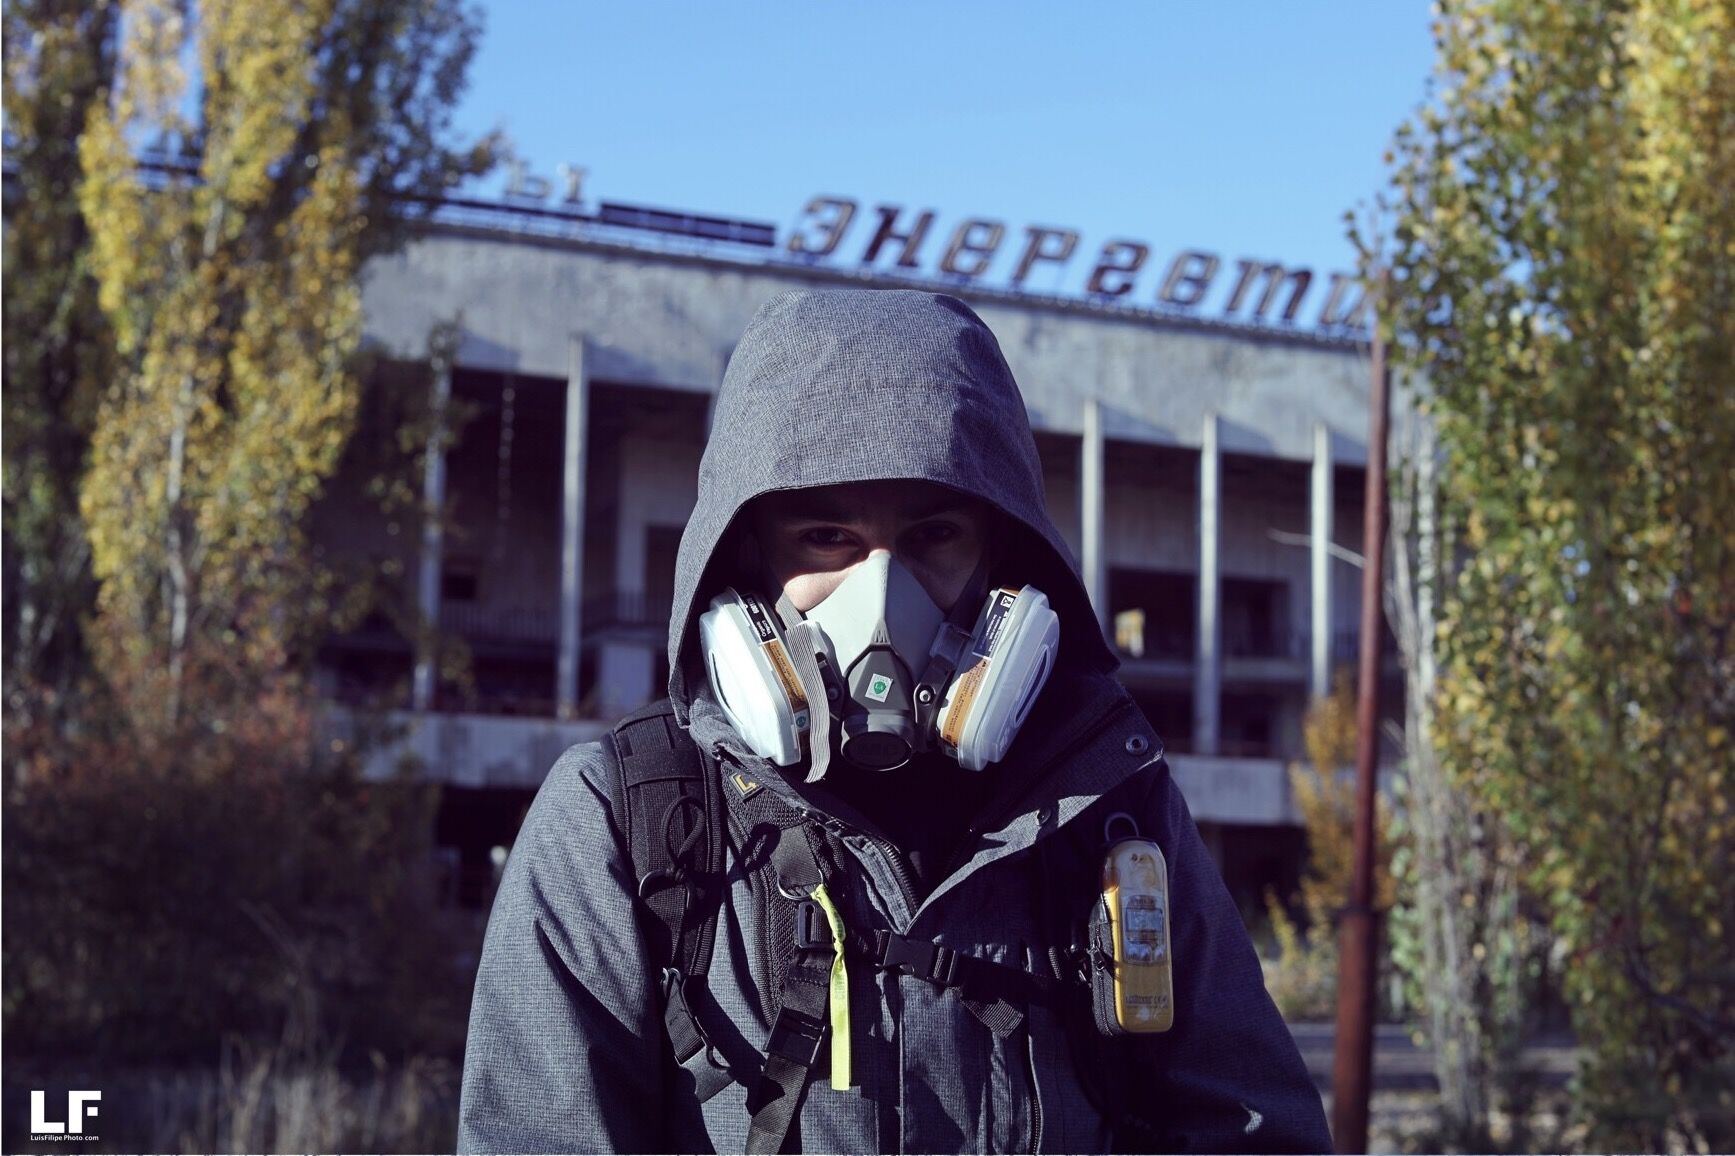 Luis Filipe Photographer - viaje-chernobyl-7.jpg